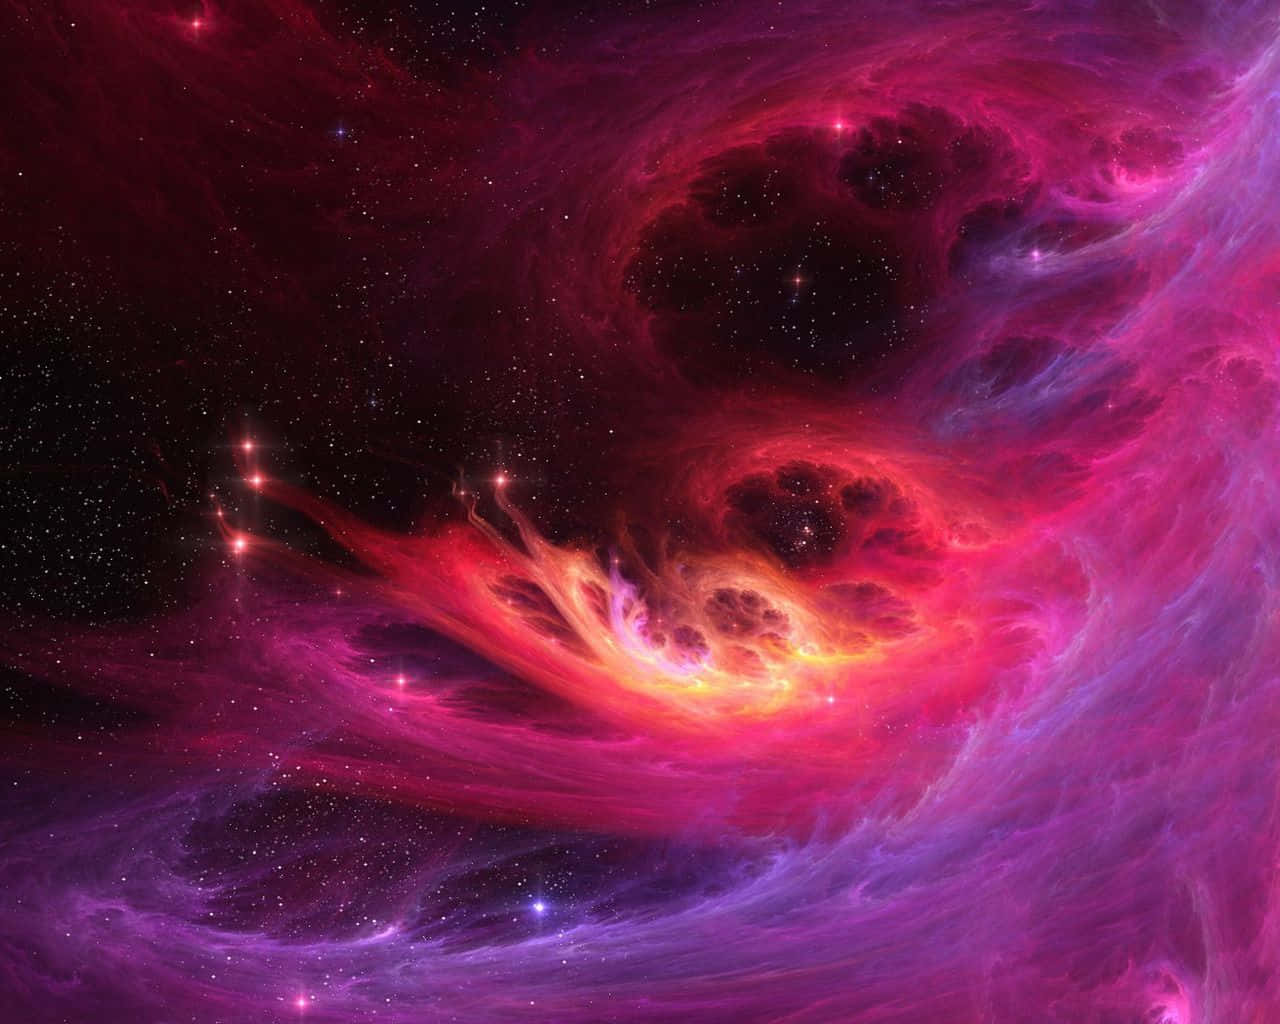 Aesthetic Interstellar Cloud formation captured in deep space Wallpaper